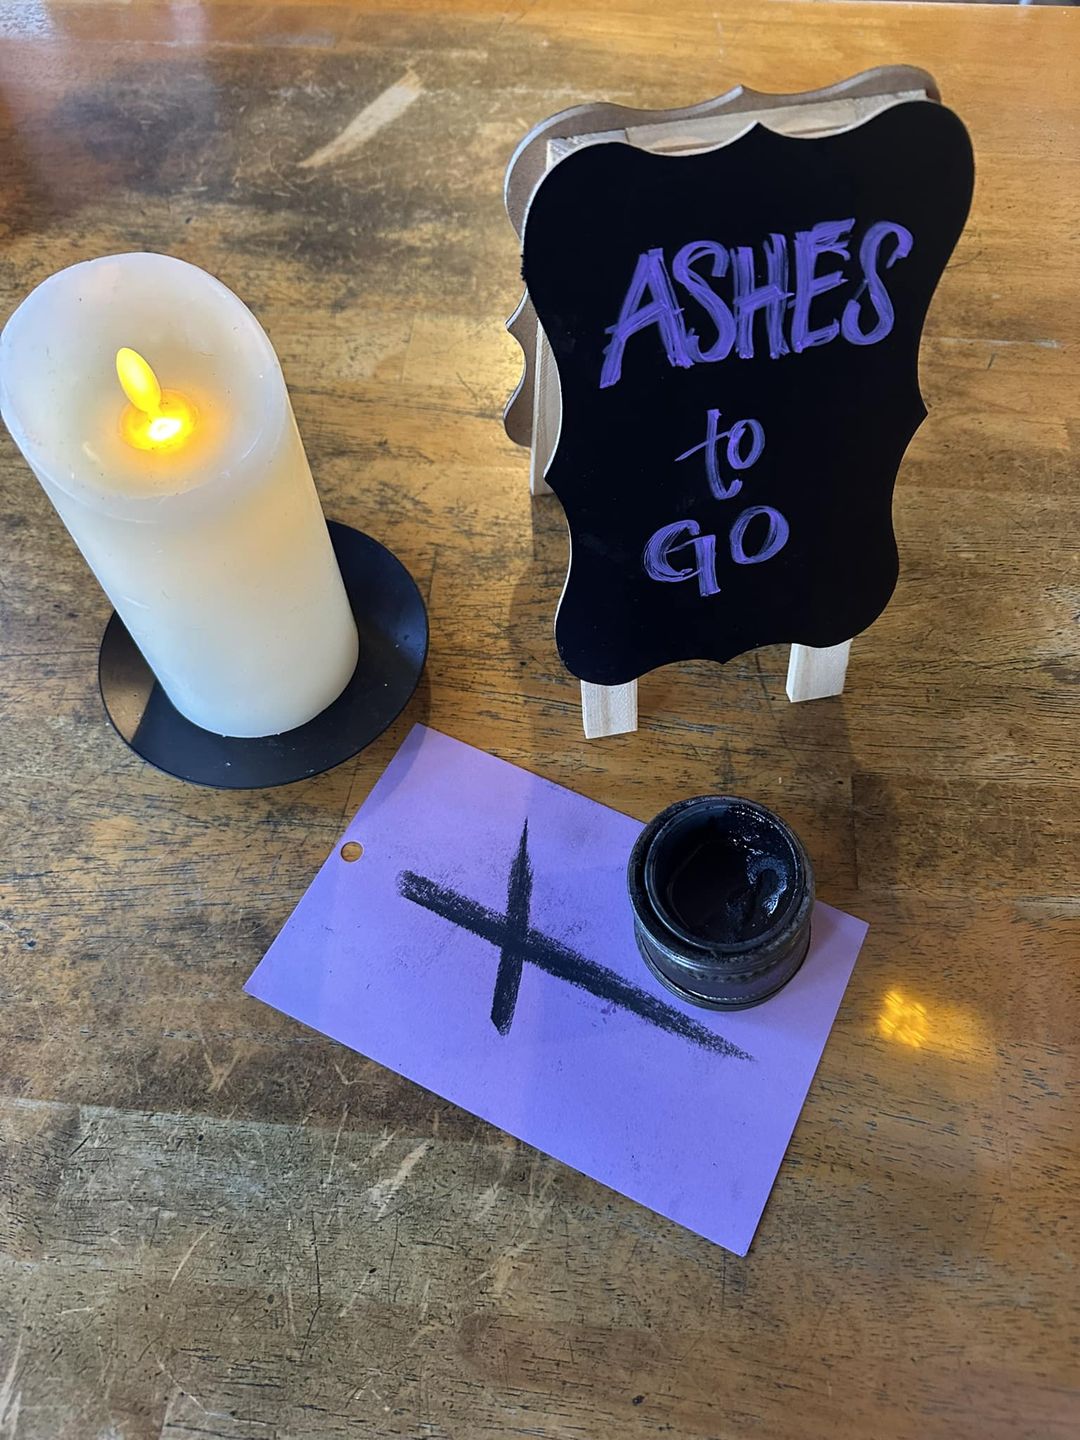 Ash Wednesday reflection